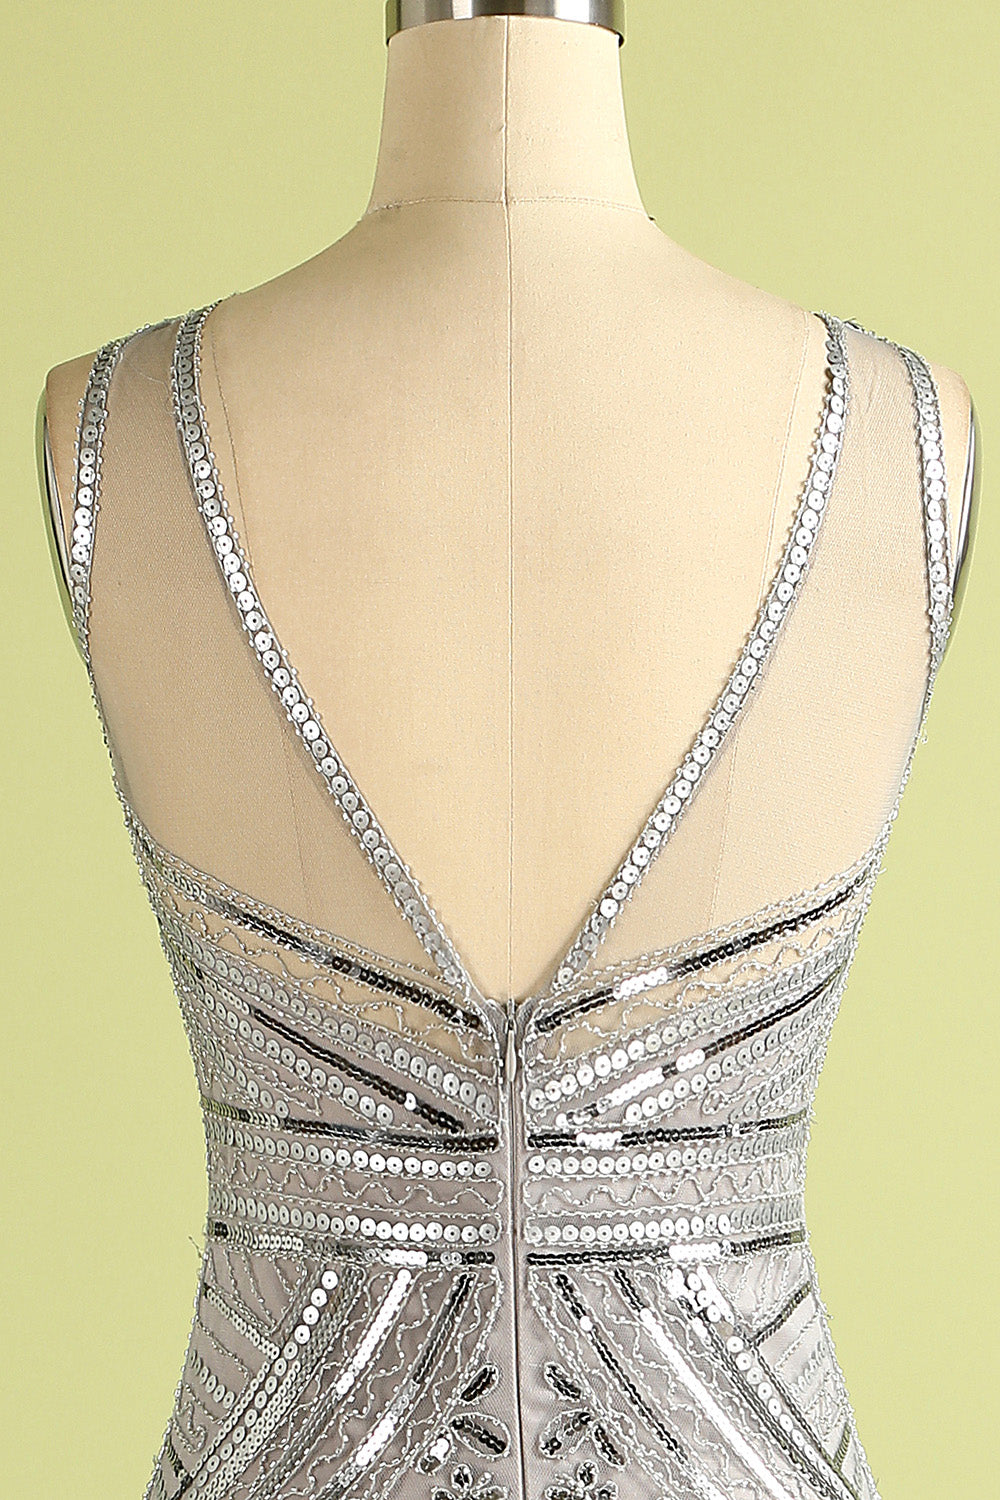 Sequin Long Tulle 1920s Dress